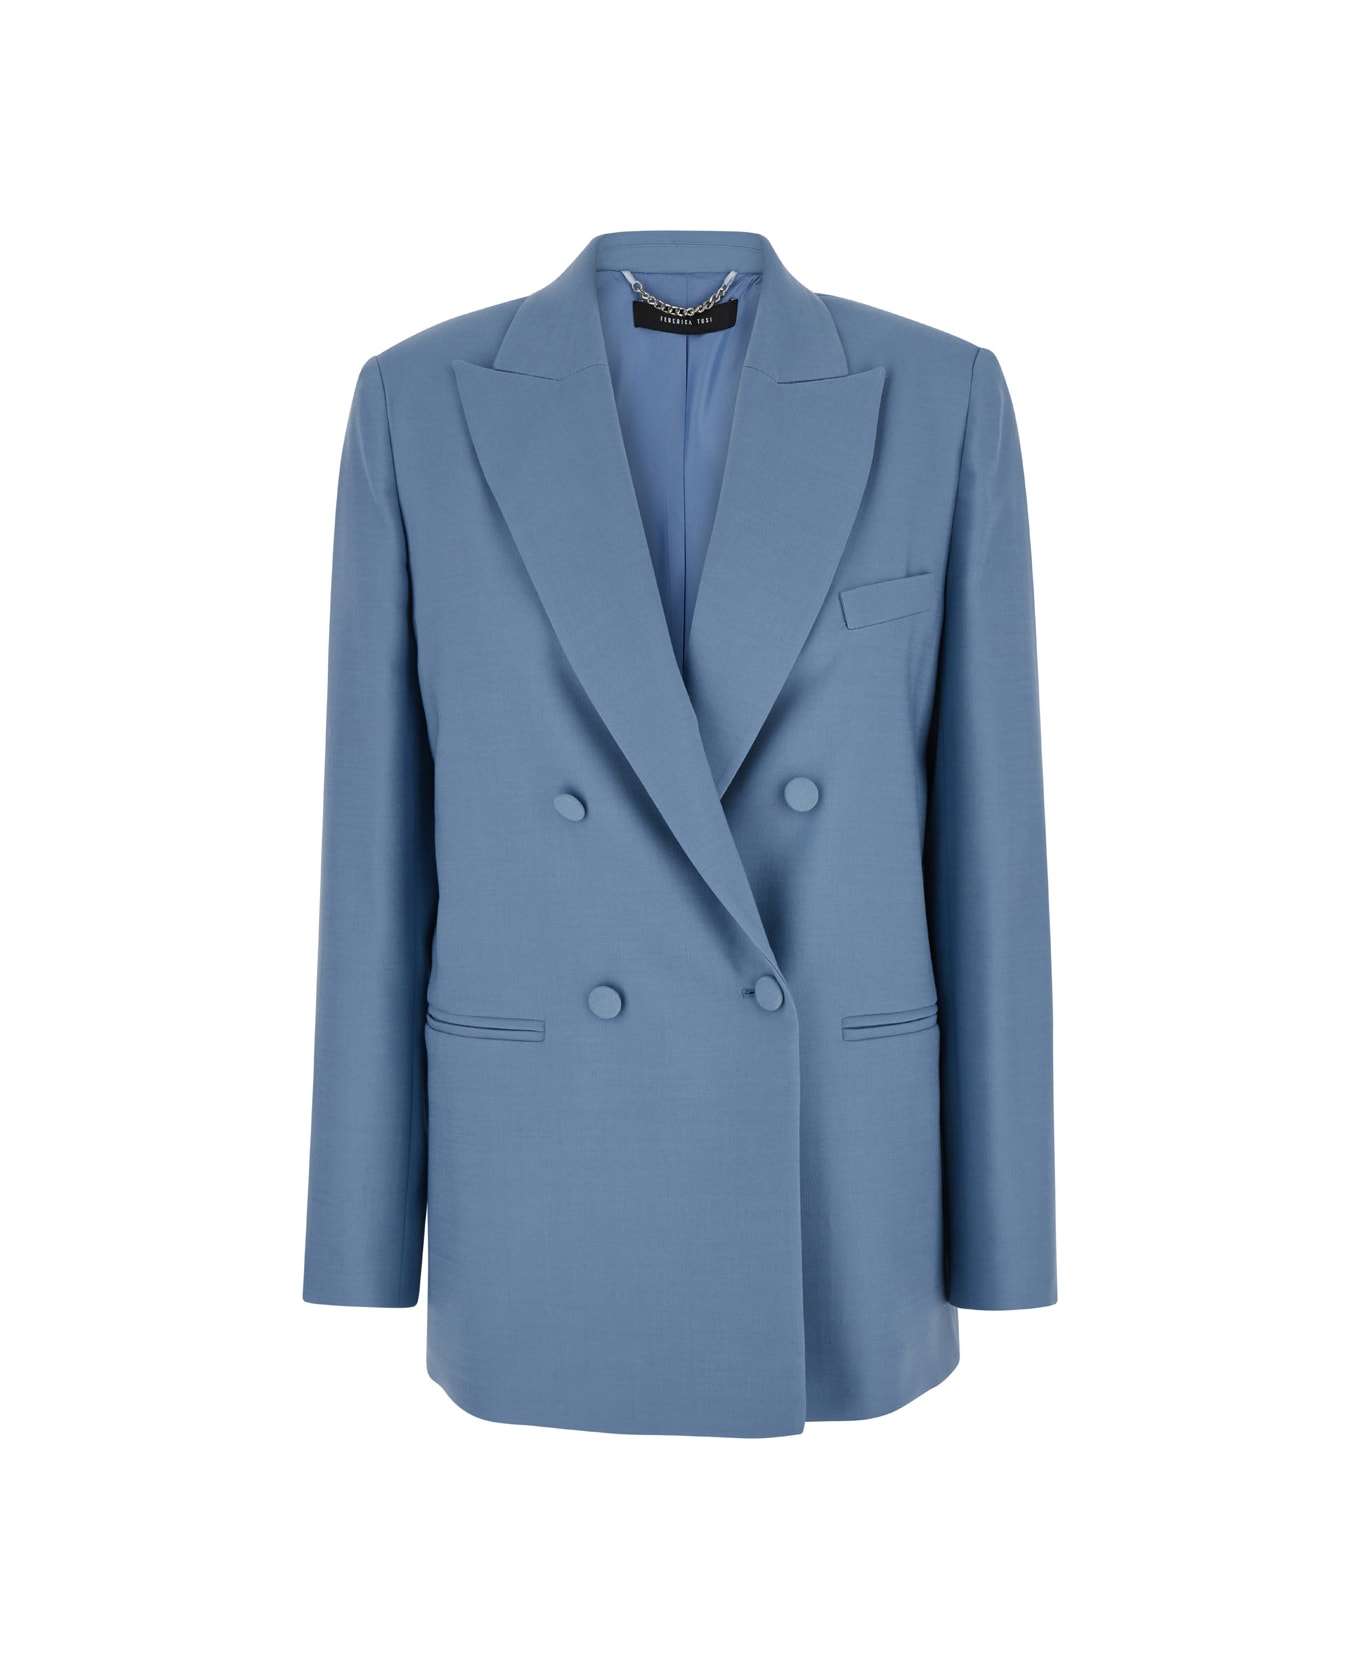 Federica Tosi Light Blue Double-breasted Blazer In Wool Blend Stretch Woman - Blu ブレザー